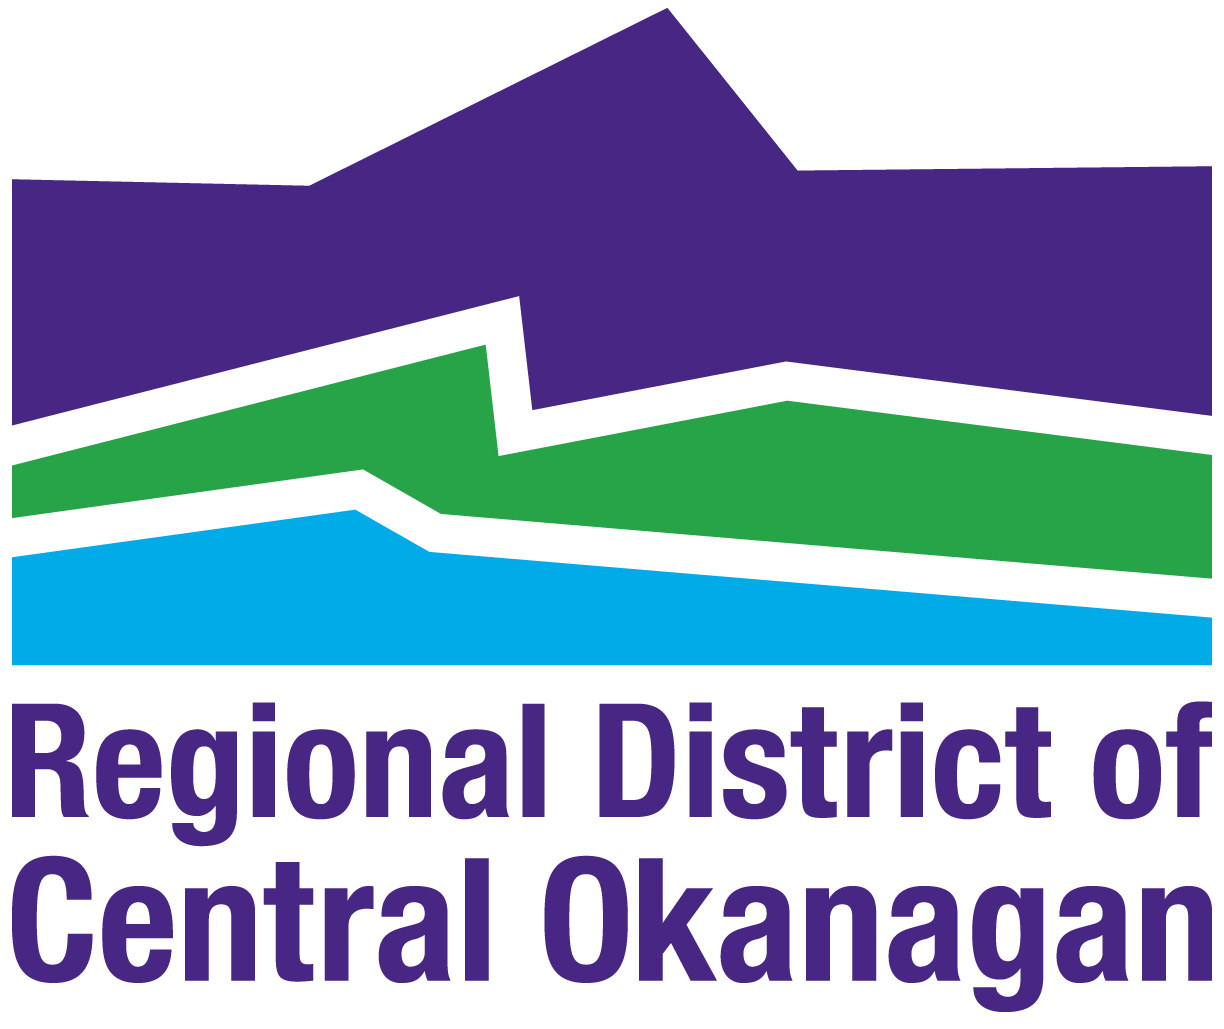 Central Okanagan (Regional District)